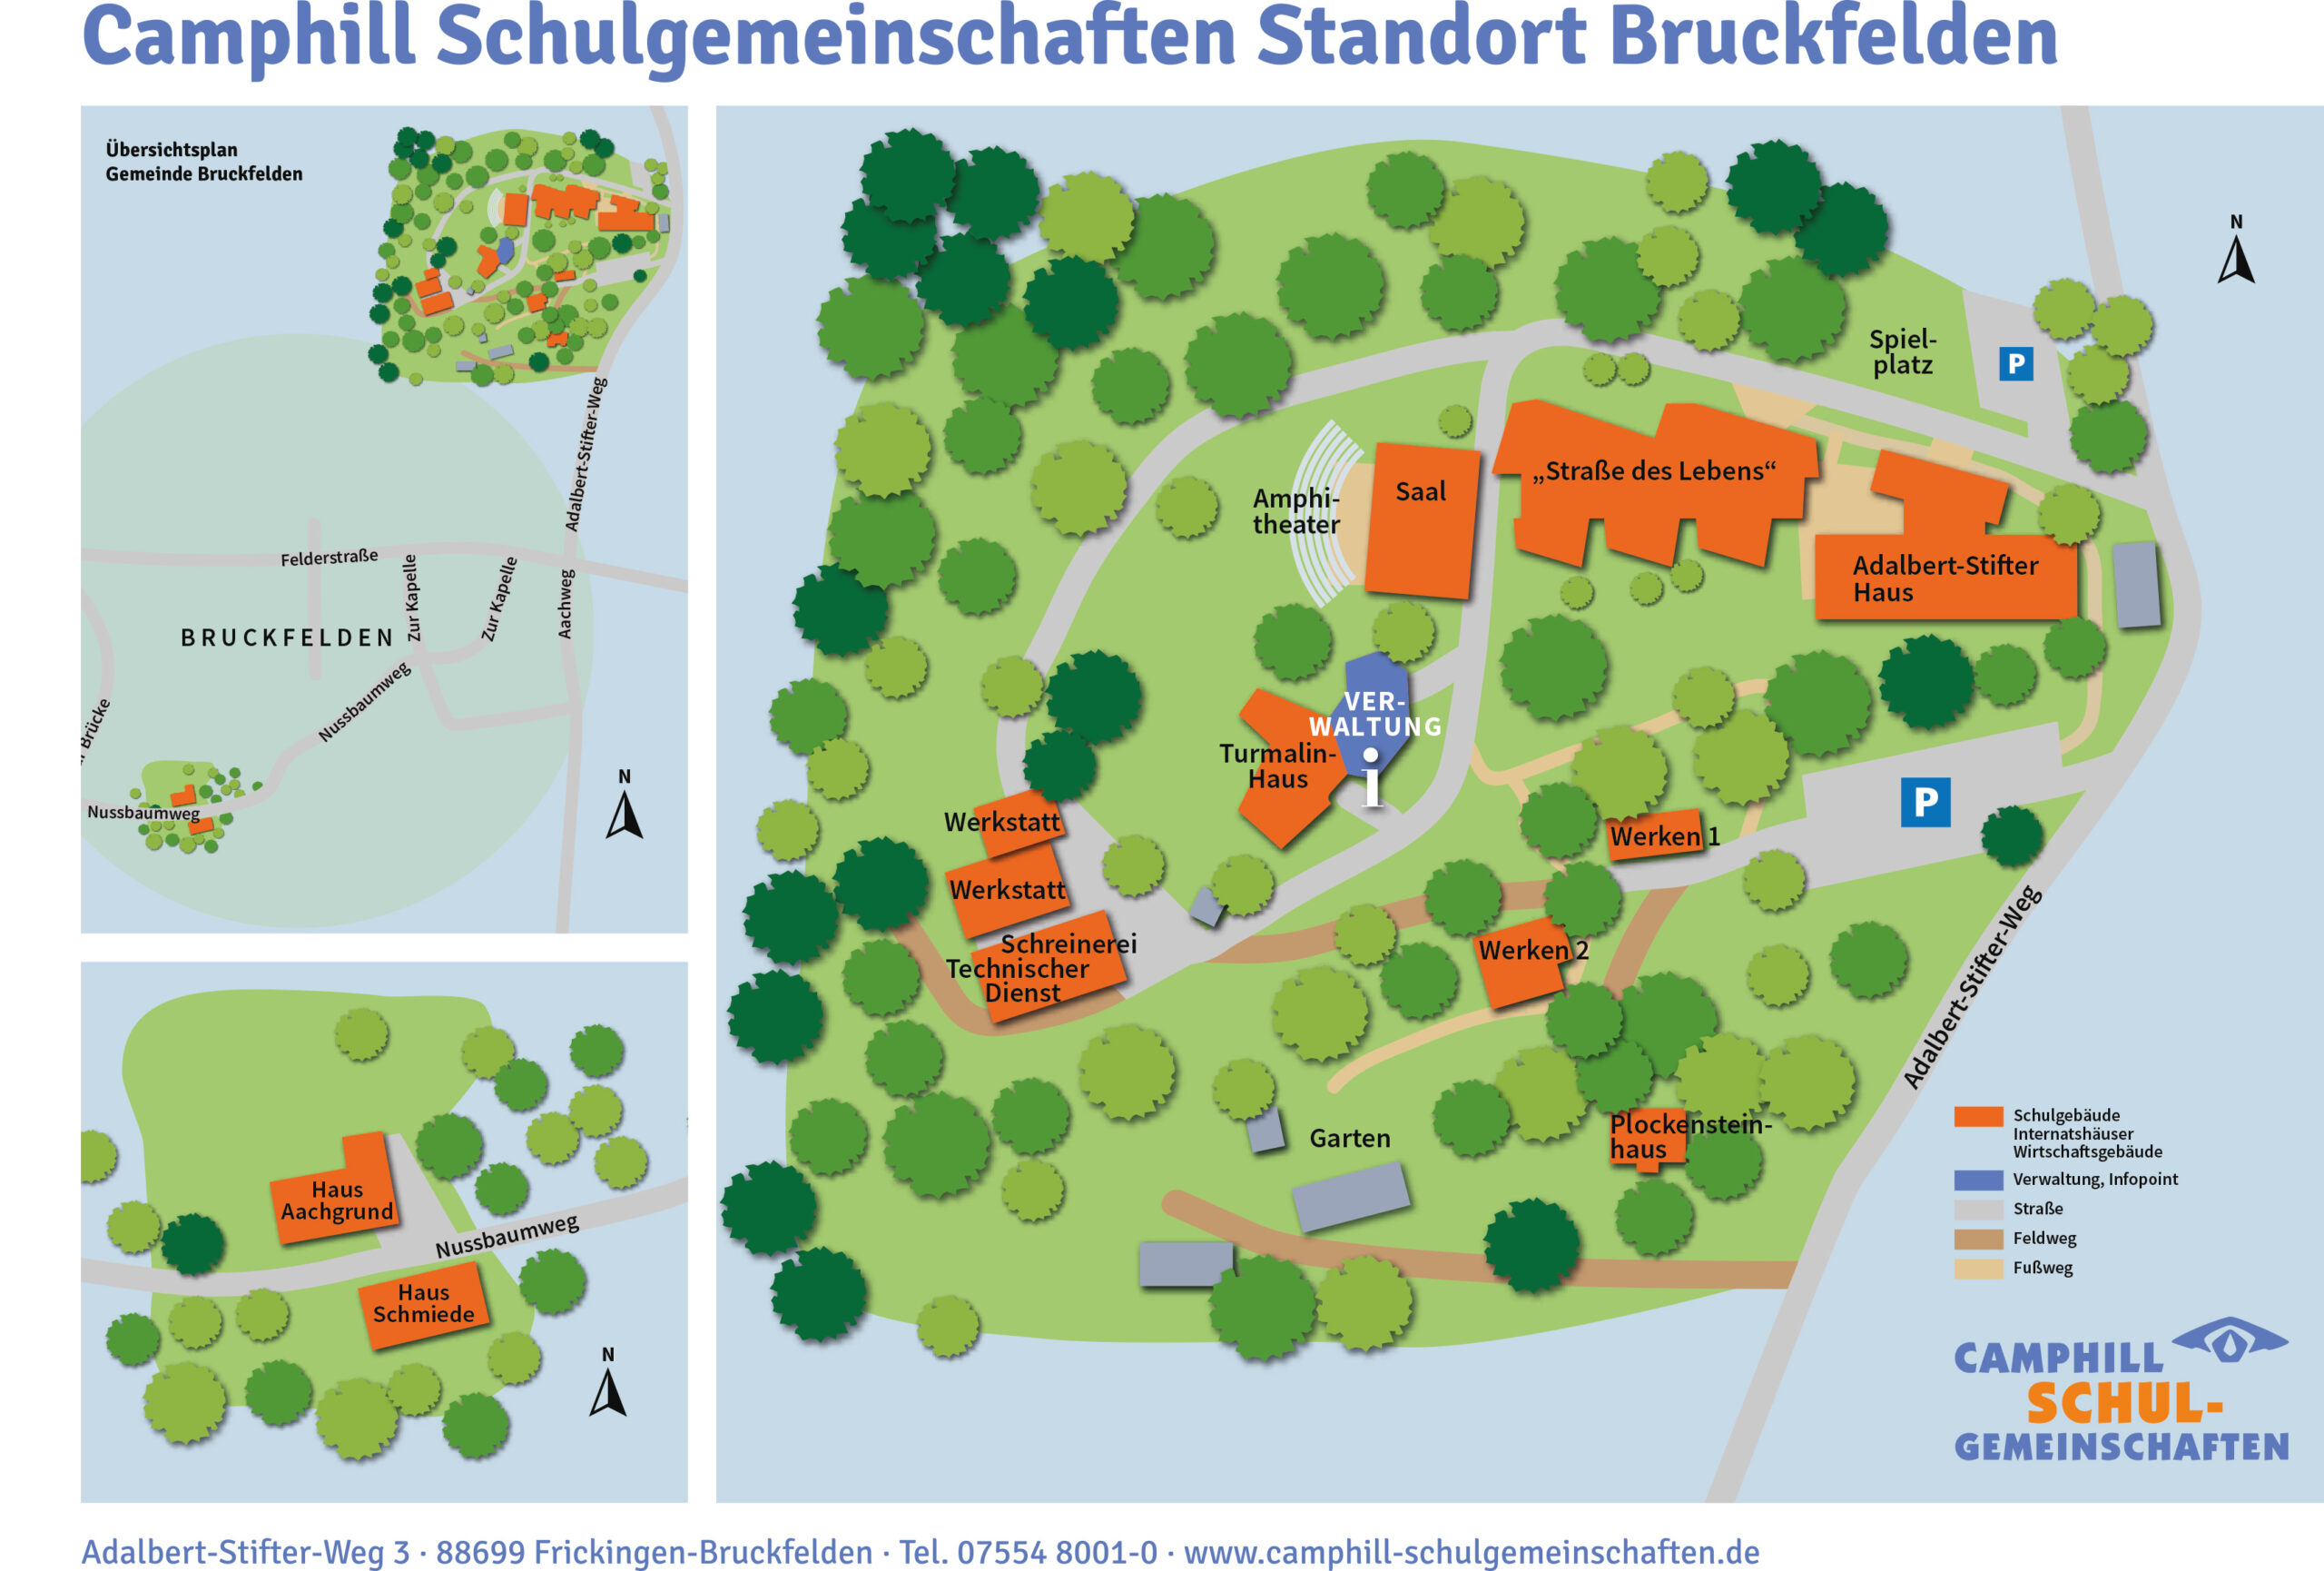 Lageplan Standort Bruckfelden